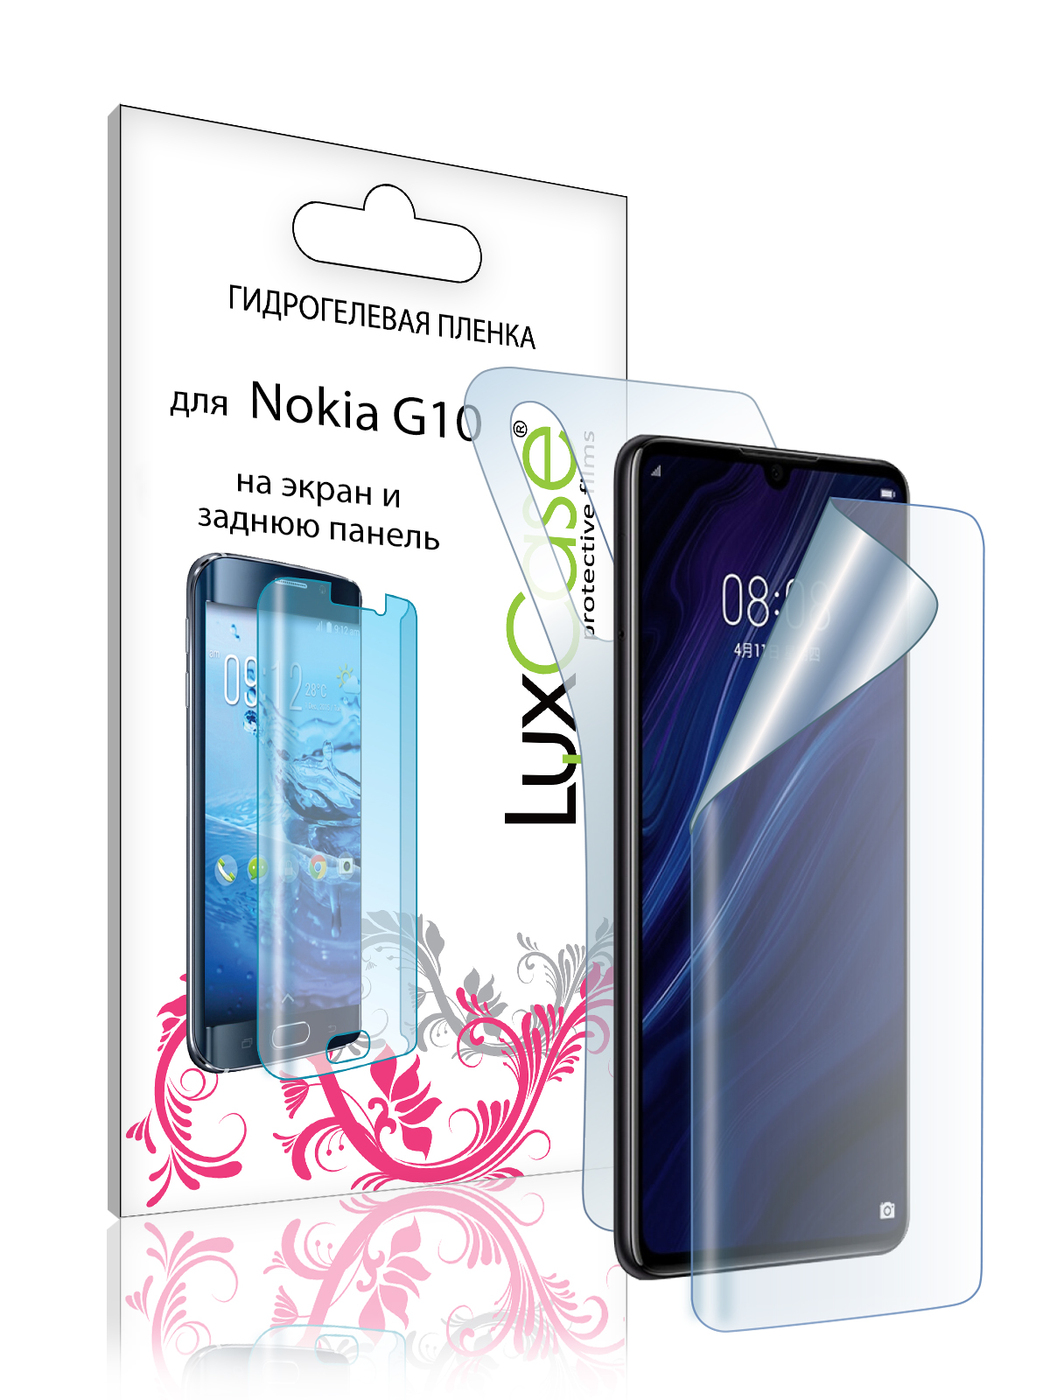 Пленка гидрогелевая LuxCase для Nokia G20 Front and Back Transparent 86394 гидрогелевая пленка luxcase для tcl 305 0 14mm transparent front and back 90593